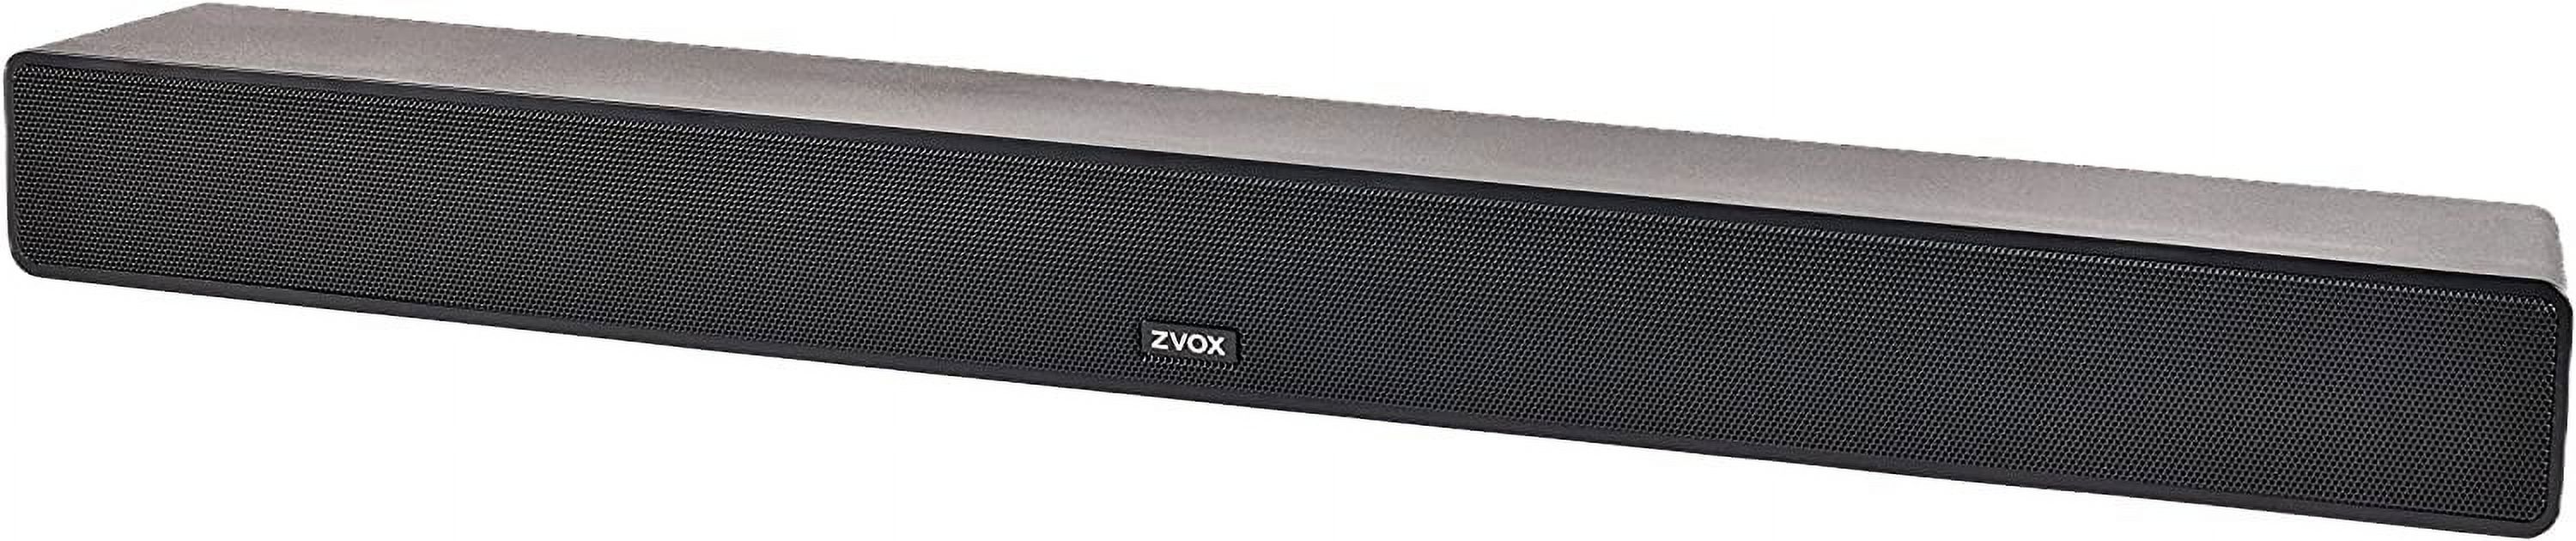 ZVOX AccuVoice AV355 Low-Profile Soundbar, Black - image 2 of 5